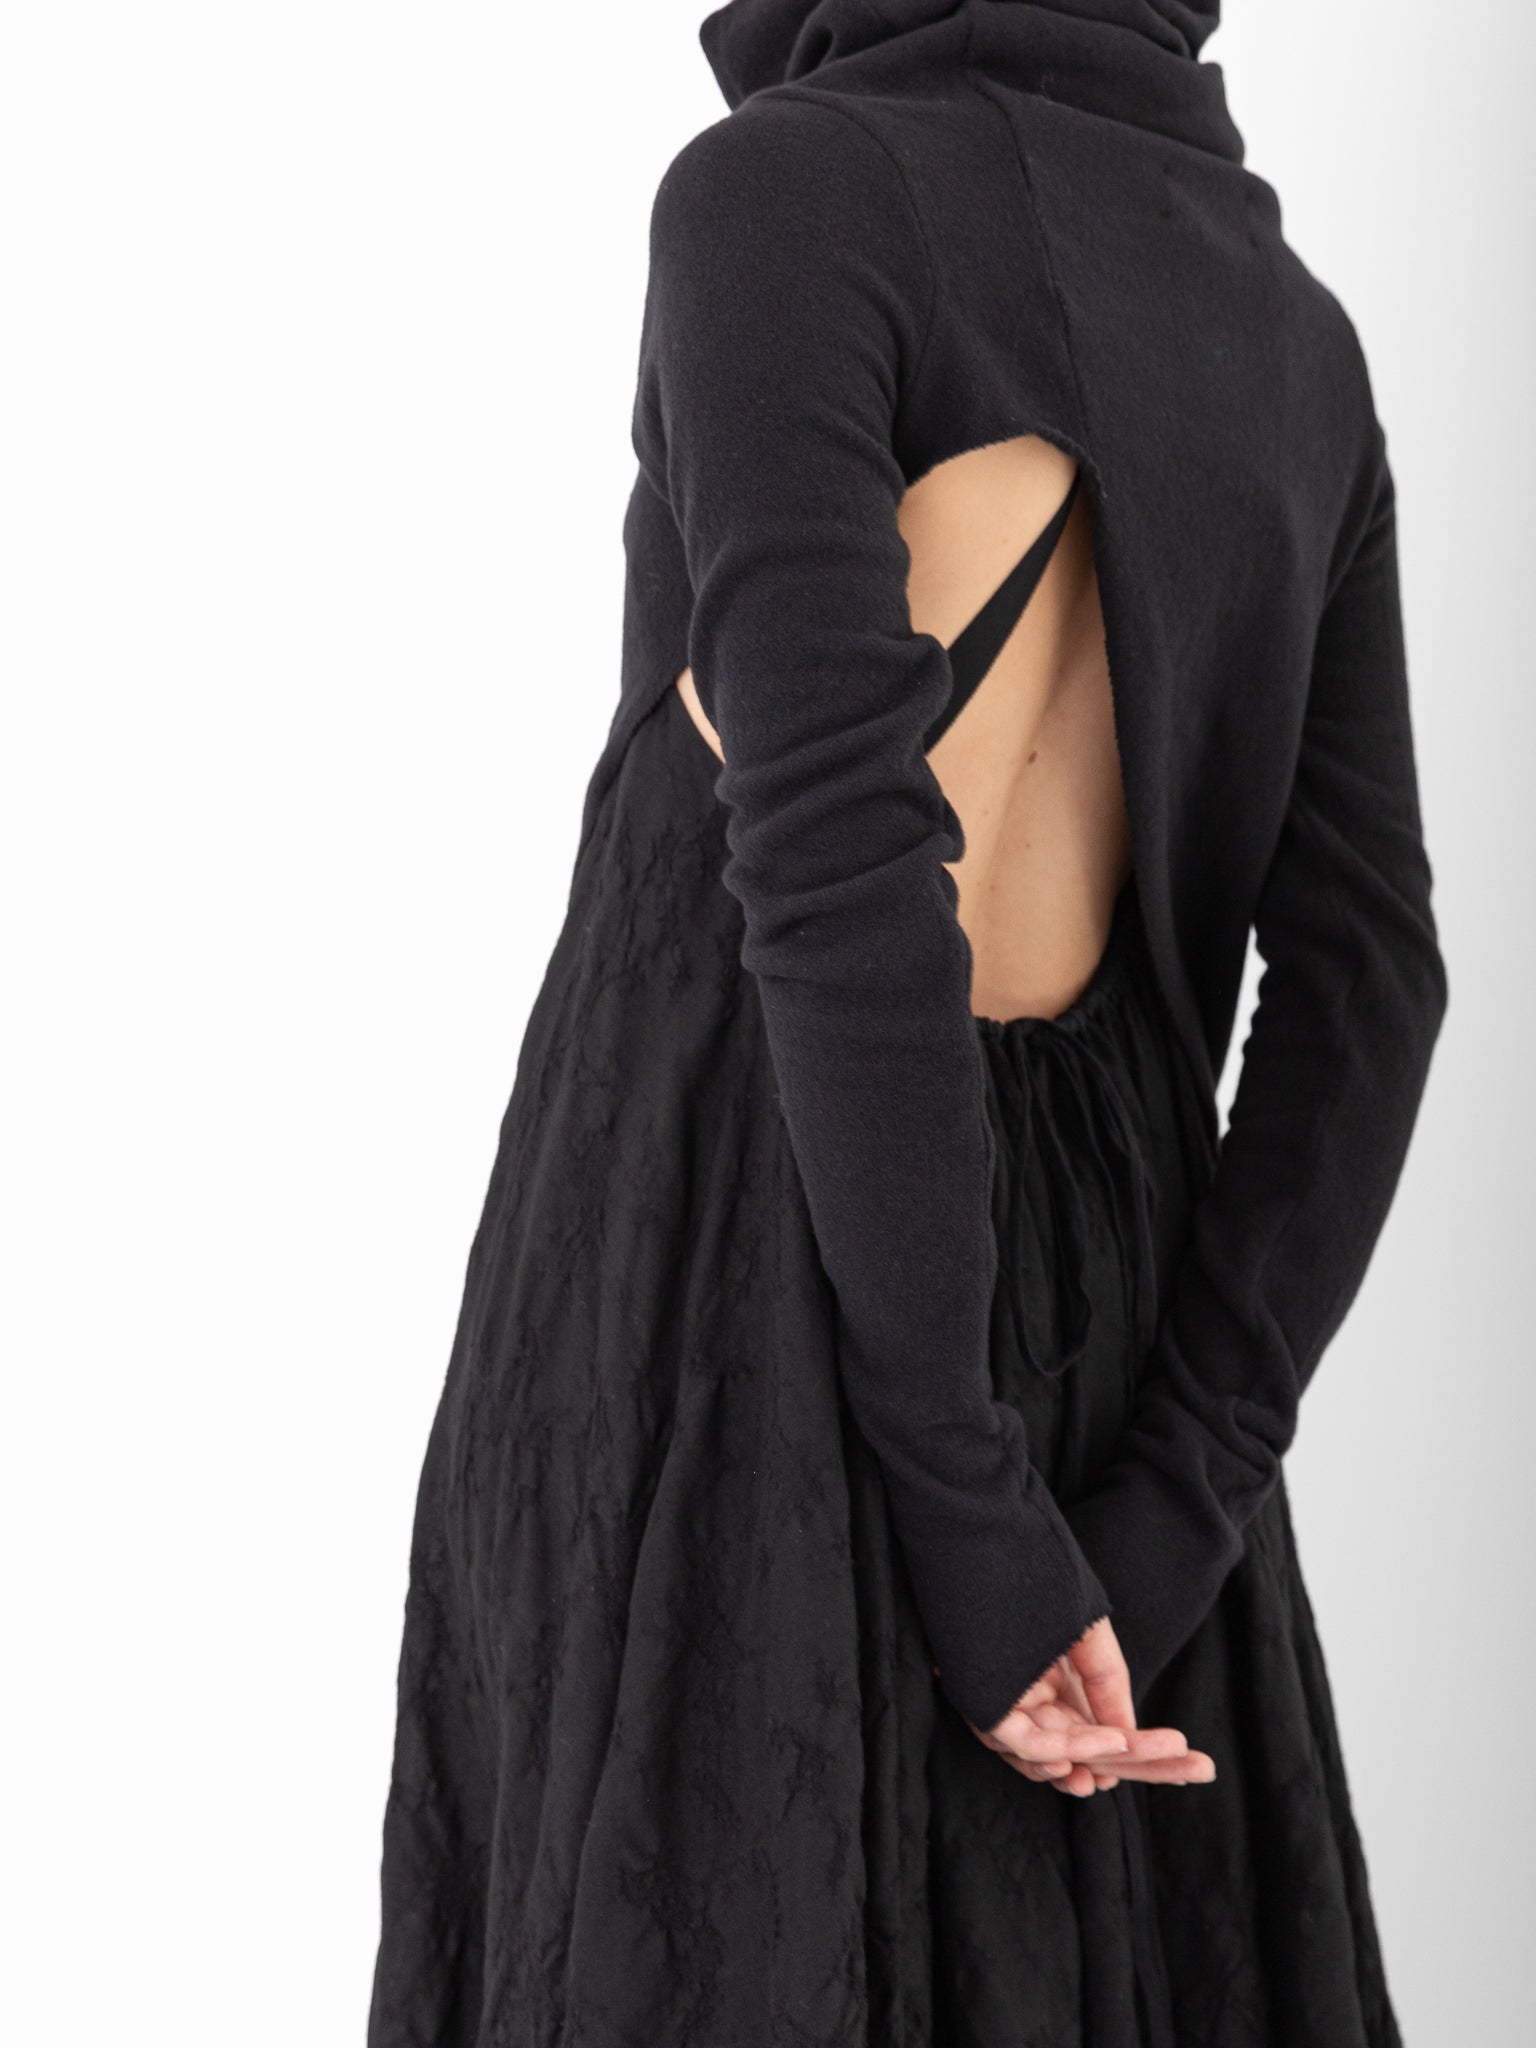 Marc LeBihan Knit Open Pullover, Black - Worthwhile